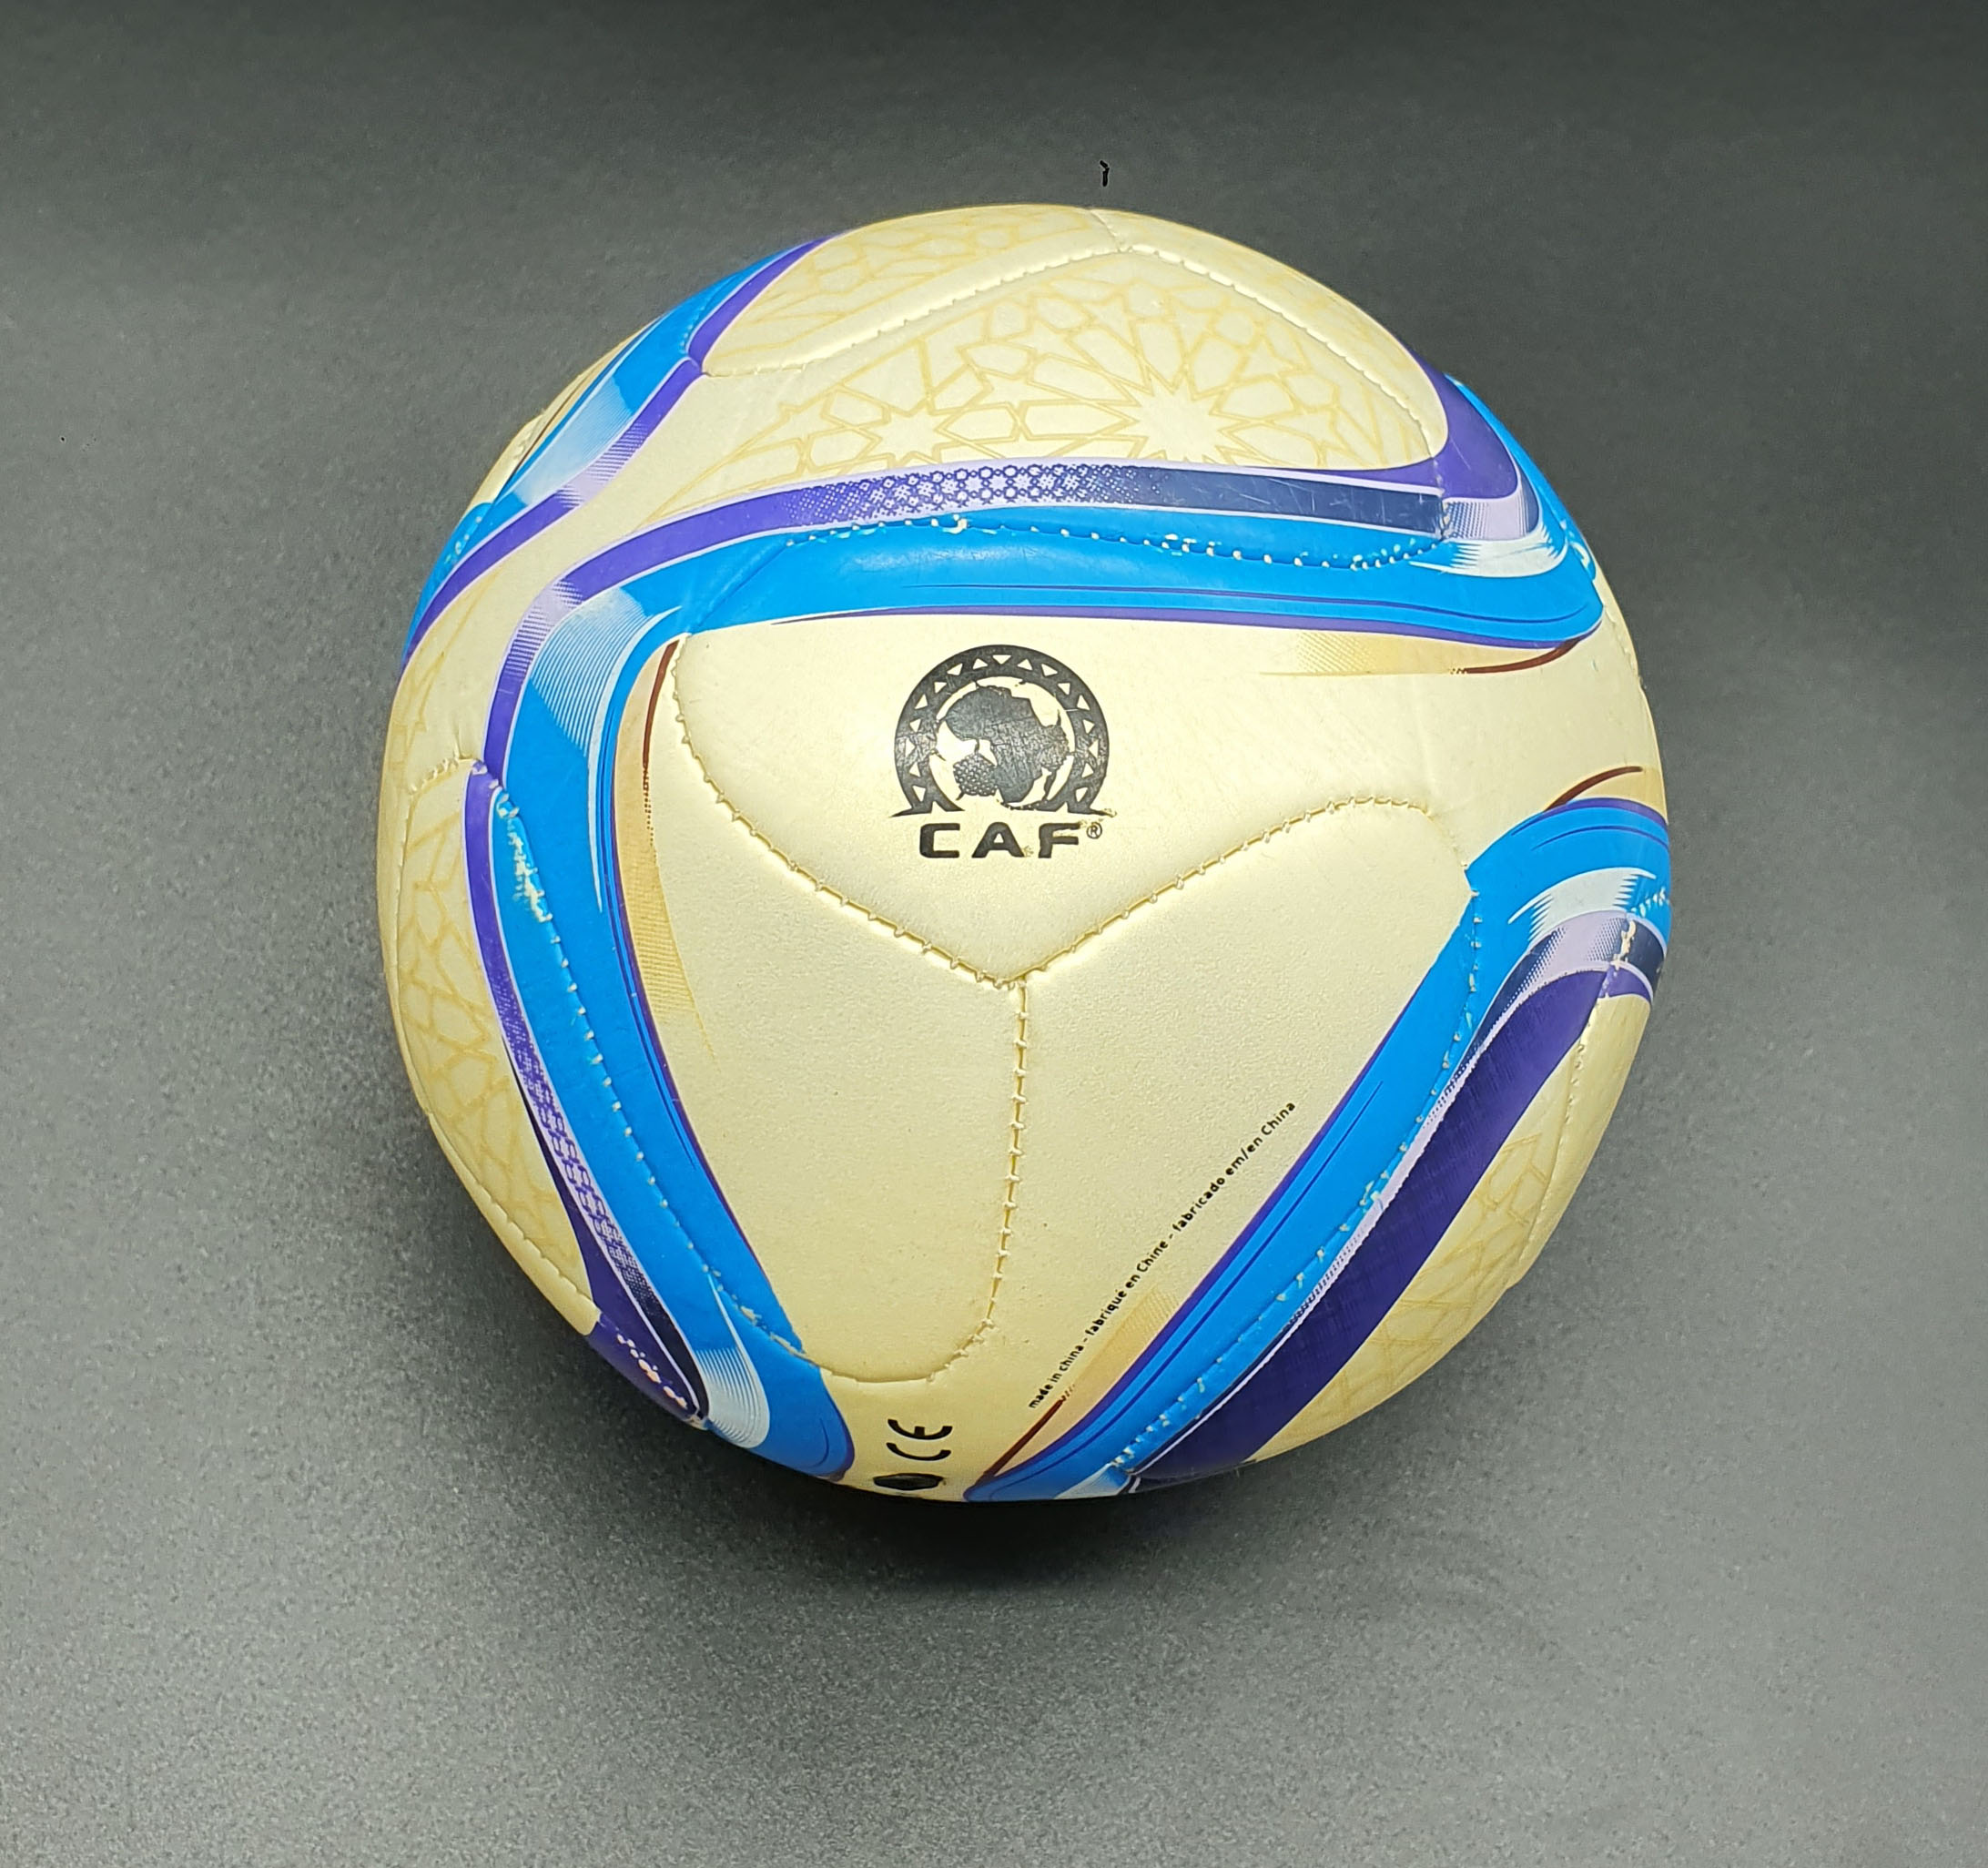 Coppa d'Africa Equatoriale mini pallone Adidas "Marhaba" » BOLA Store